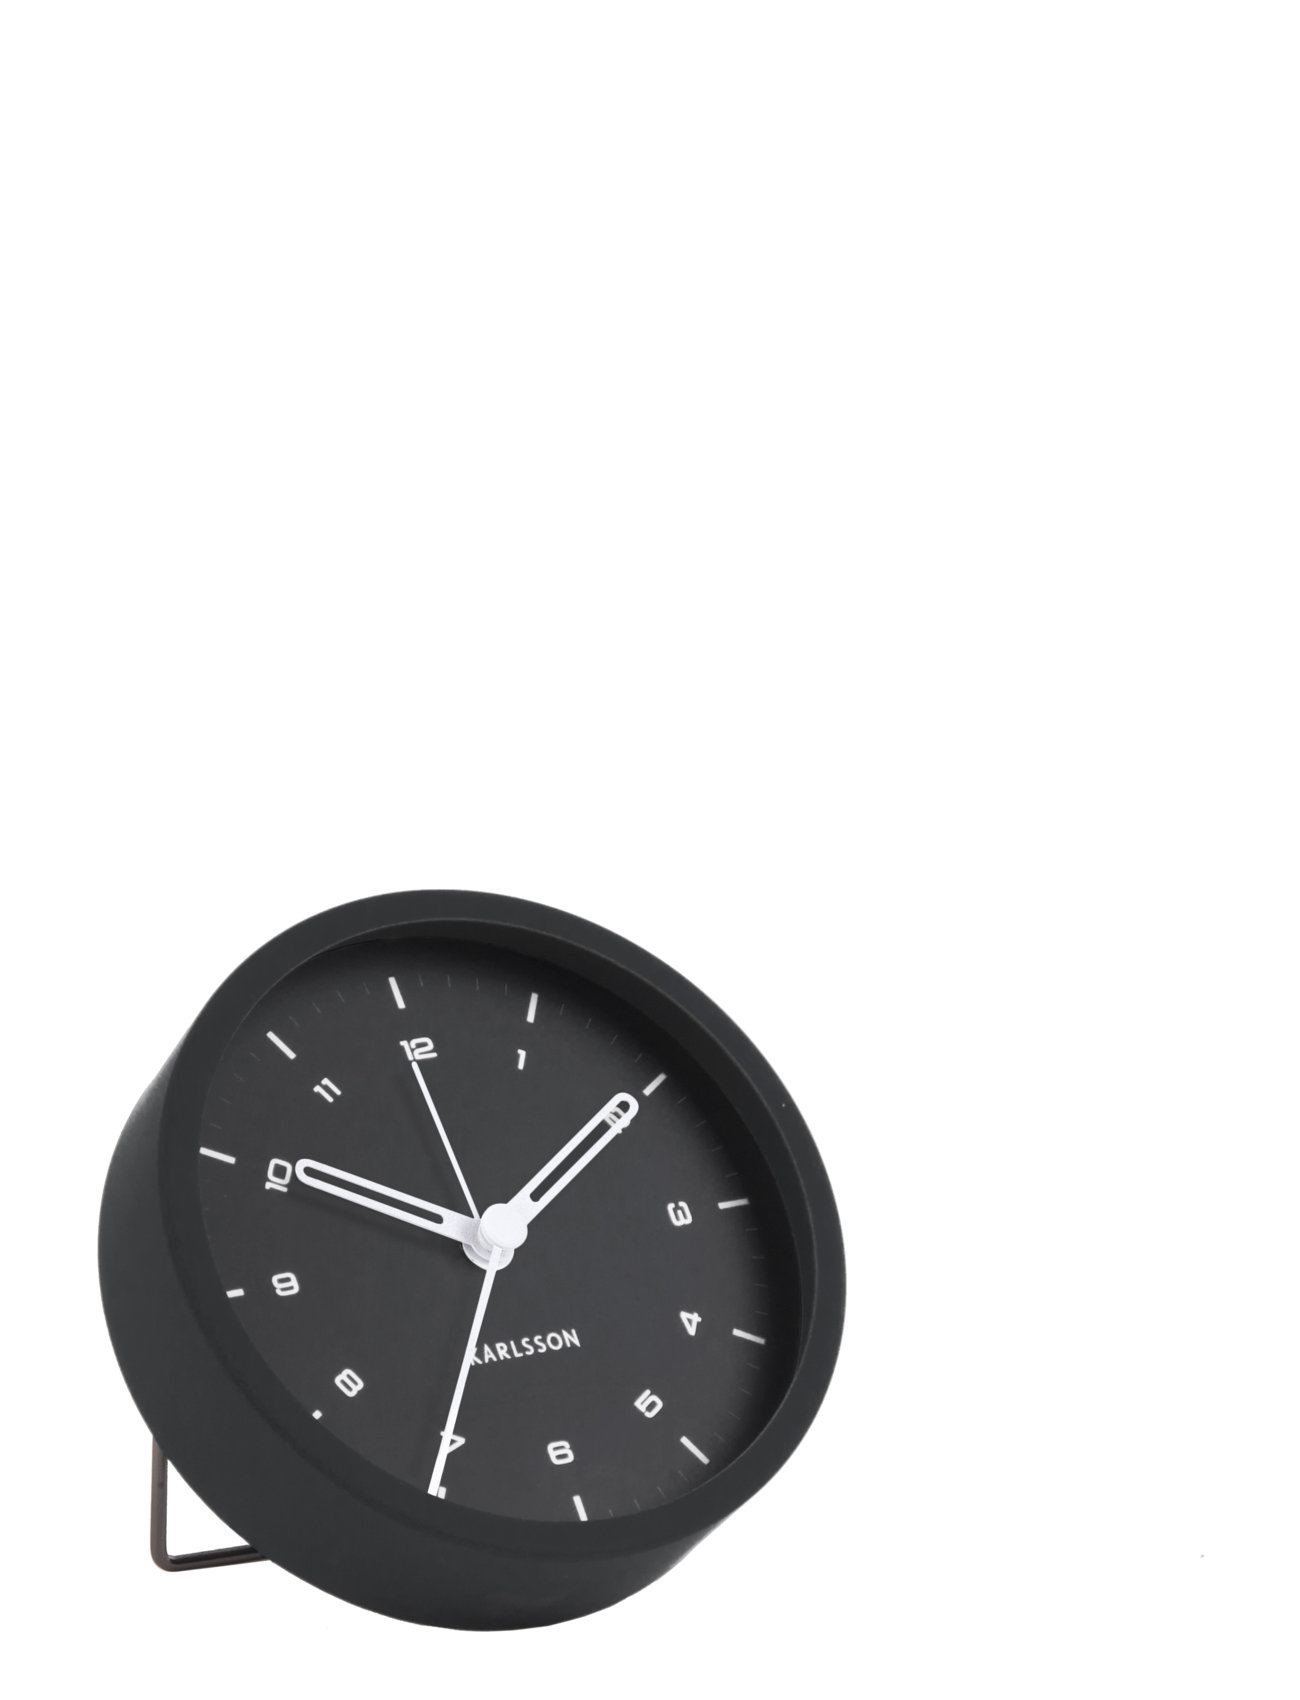 KARLSSON "Alarm Clock Tinge Steel Home Decoration Watches Alarm Clocks Black KARLSSON"